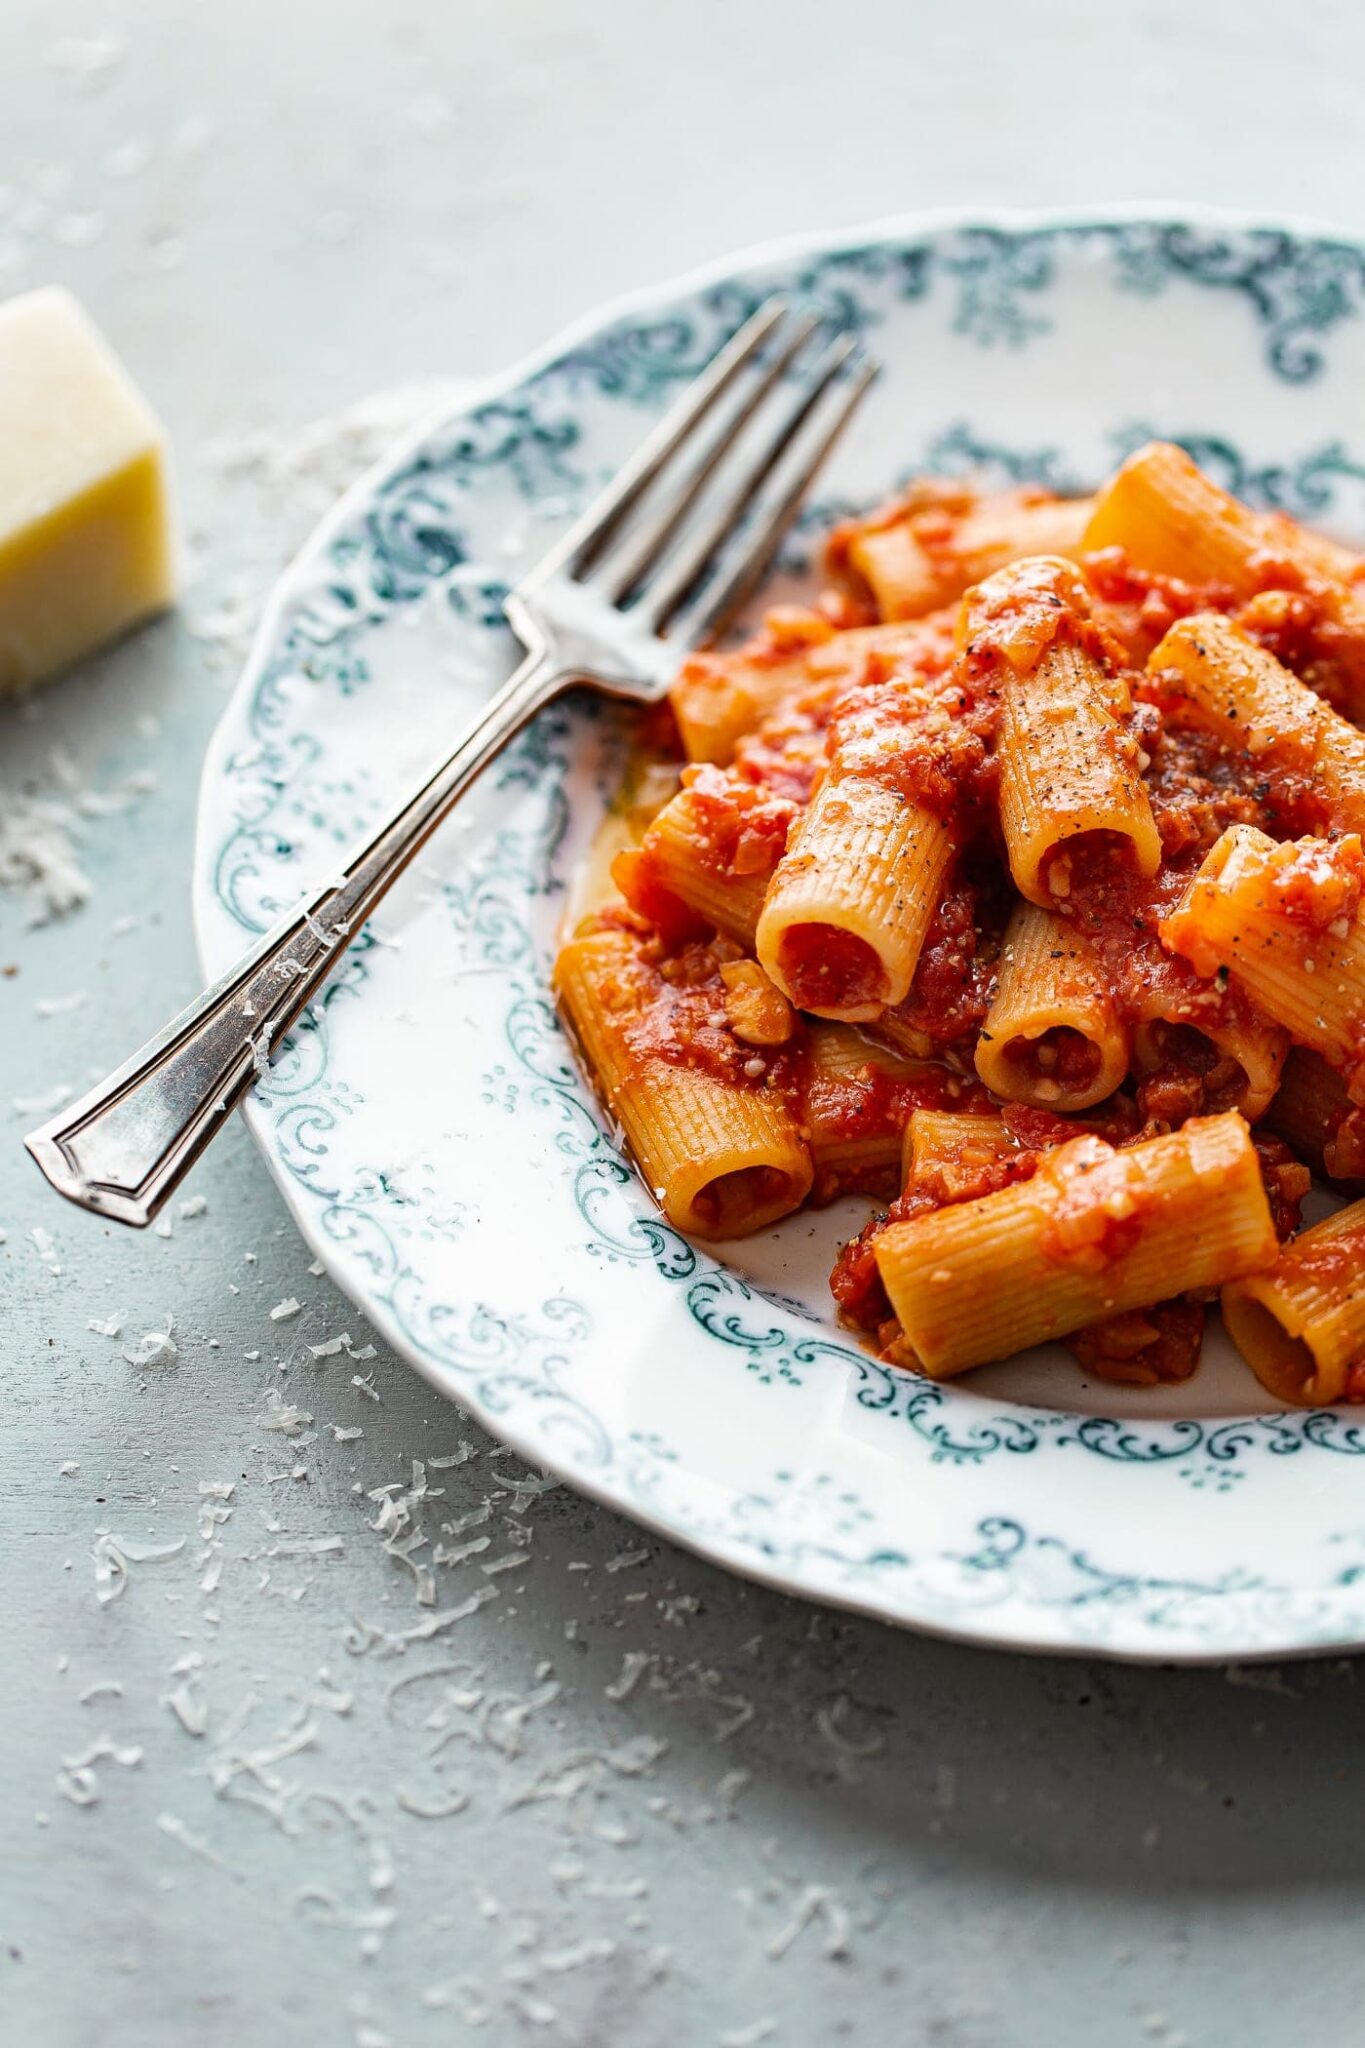 Easy Pomodoro Sauce Recipe (Italian Style!) - The Big Man's World ®